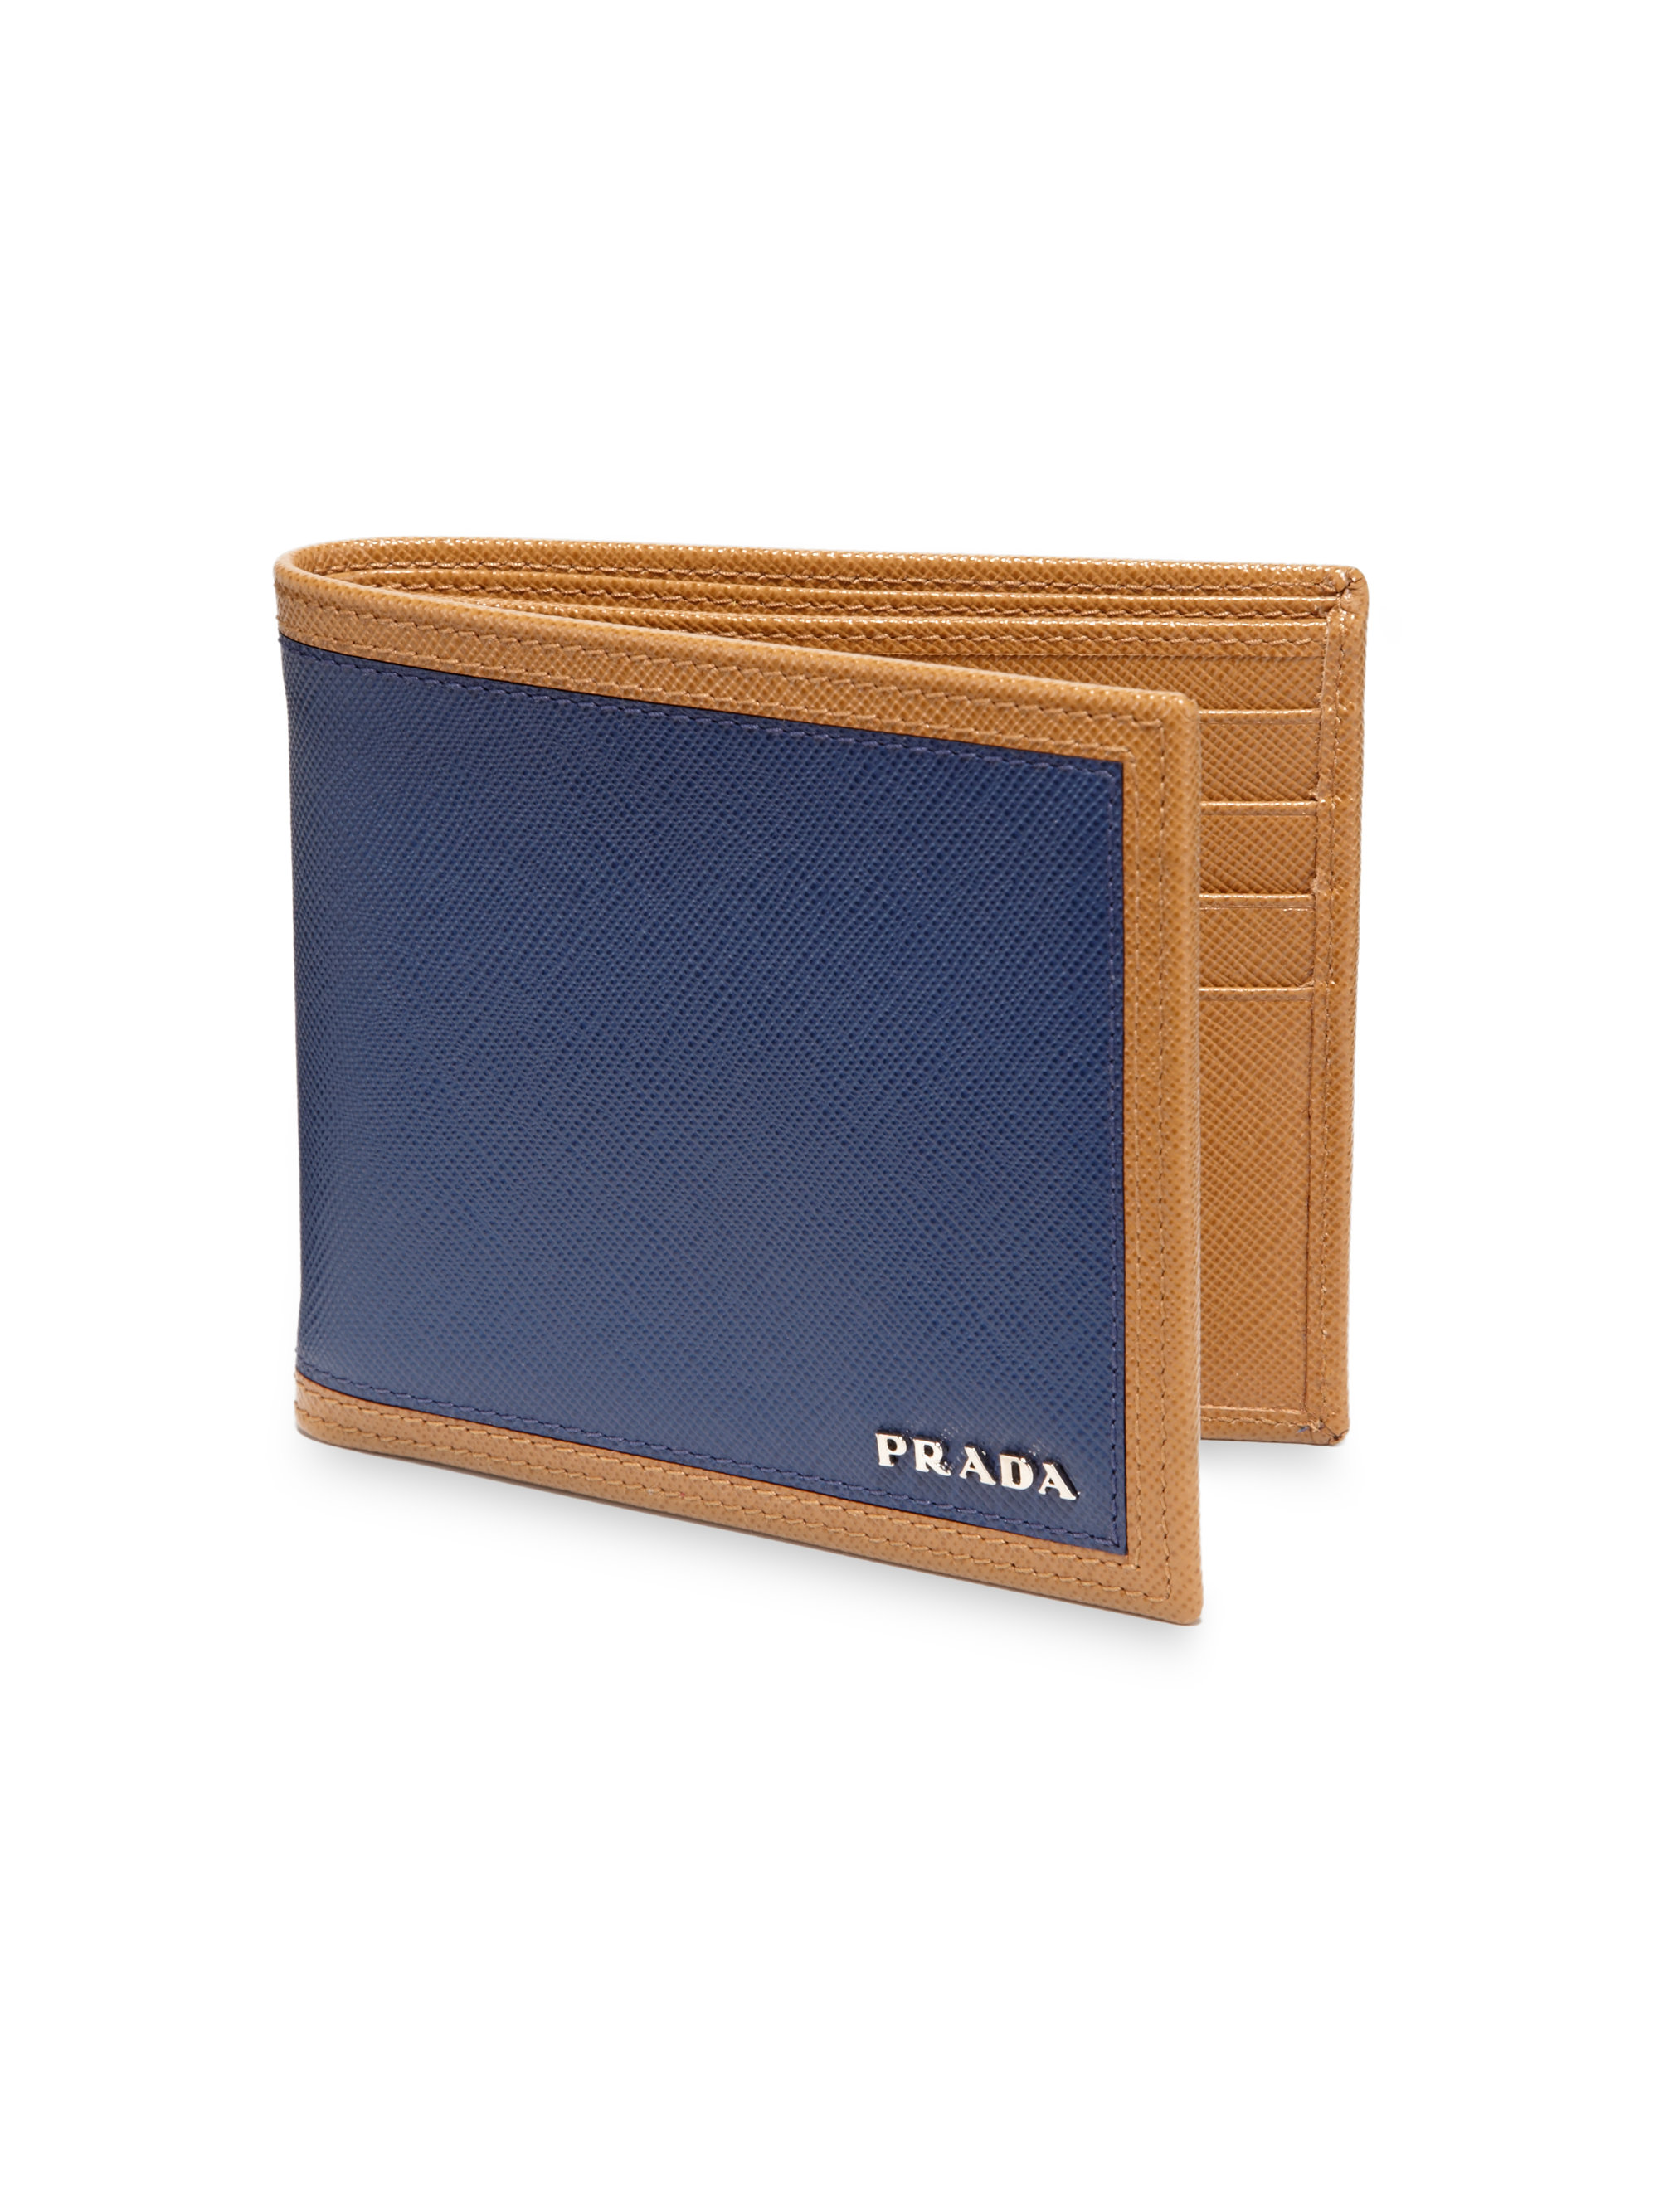 Prada Saffiano Frame Billfold Wallet in Brown for Men (BROWN-BLUE ...  